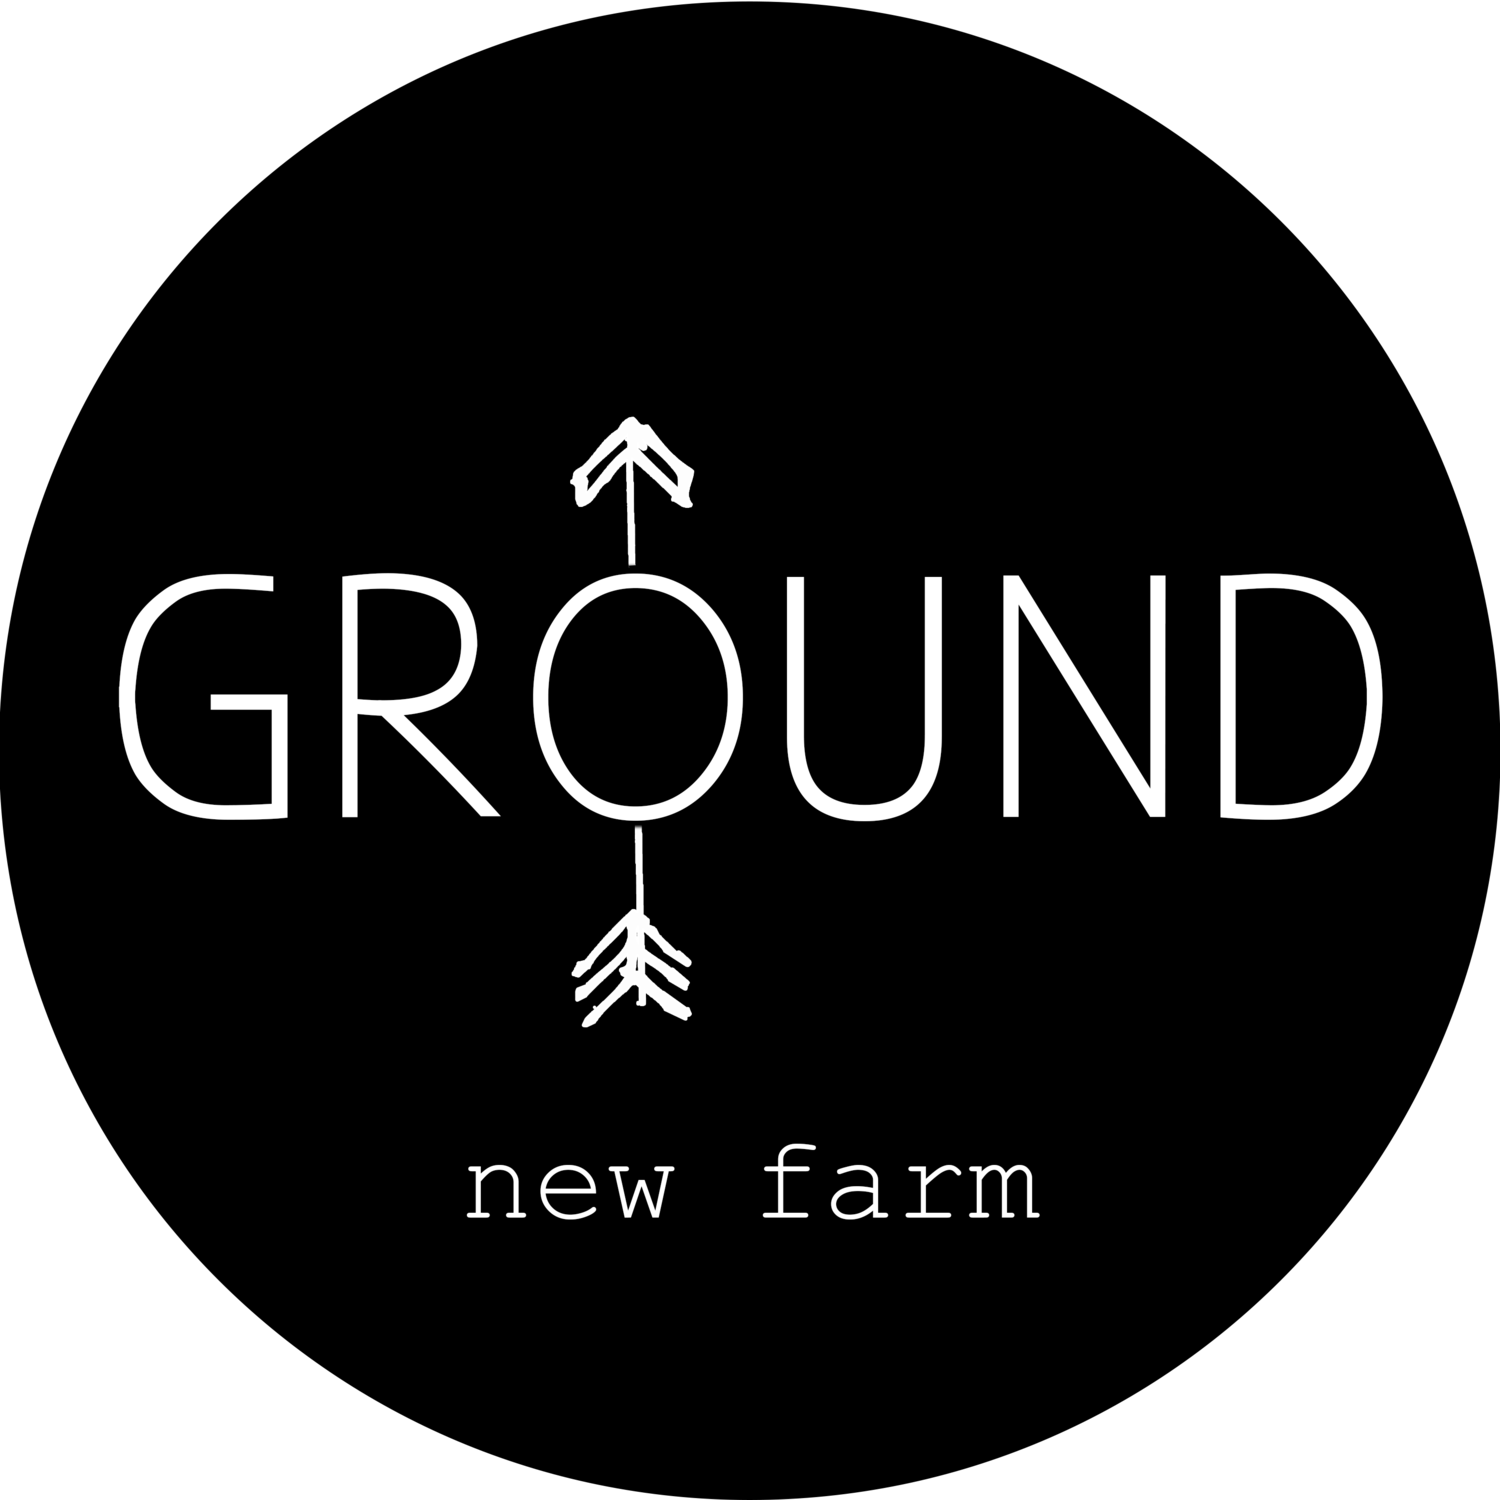 GROUND new farm